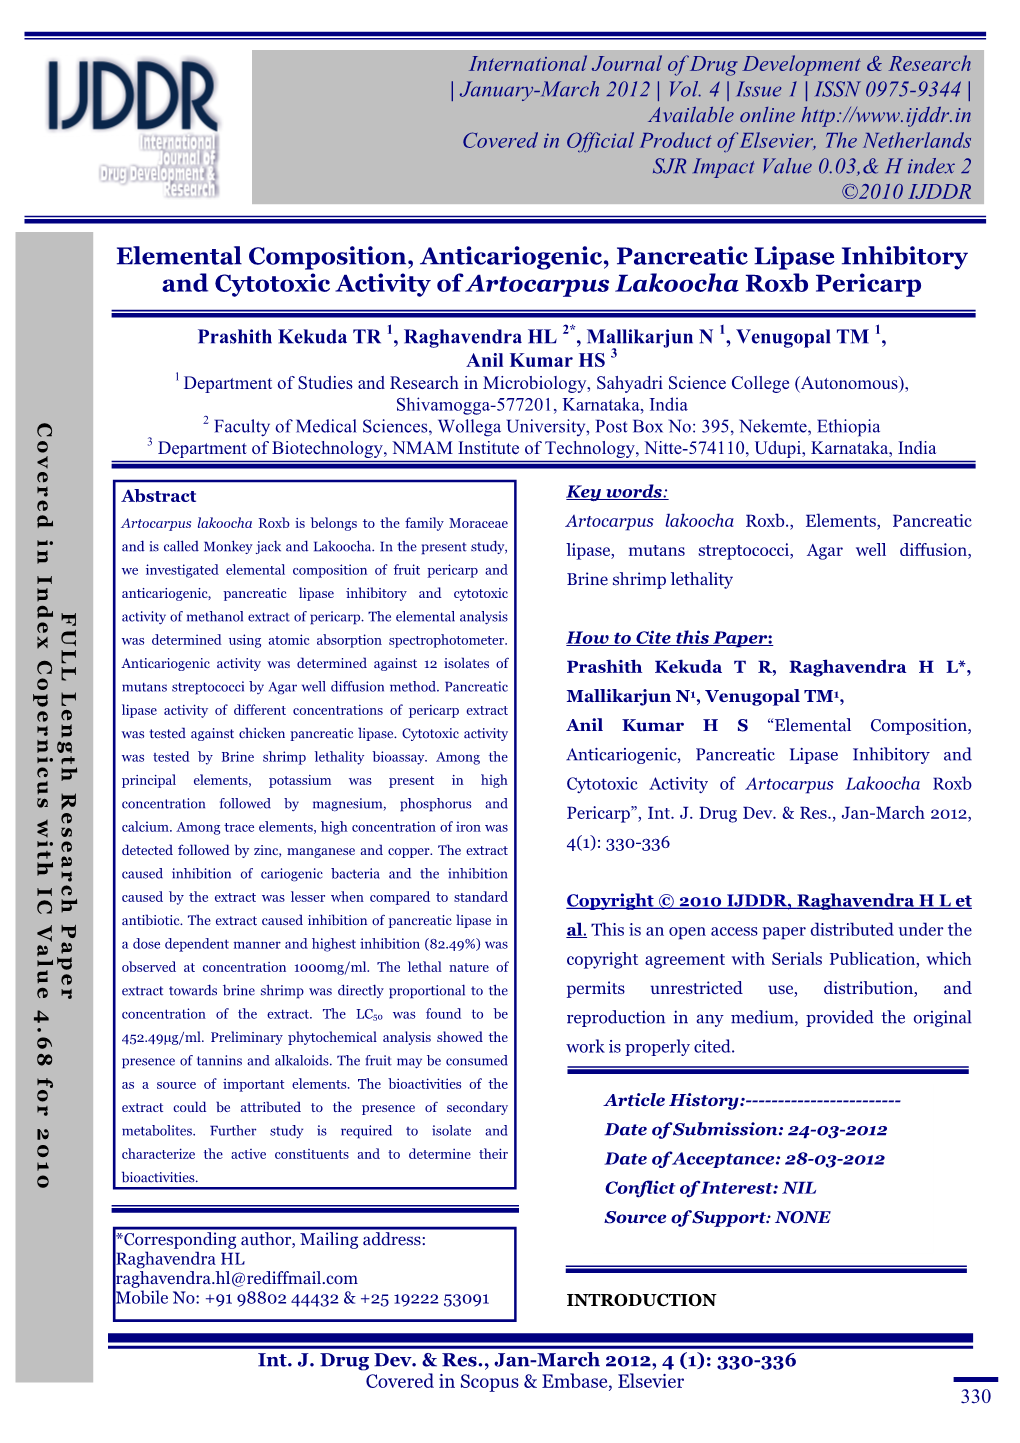 Elemental Composition, Anticariogenic, Pancreatic Lipase Inhibitory and Cytotoxic Activity of Artocarpus Lakoocha Roxb Pericarp